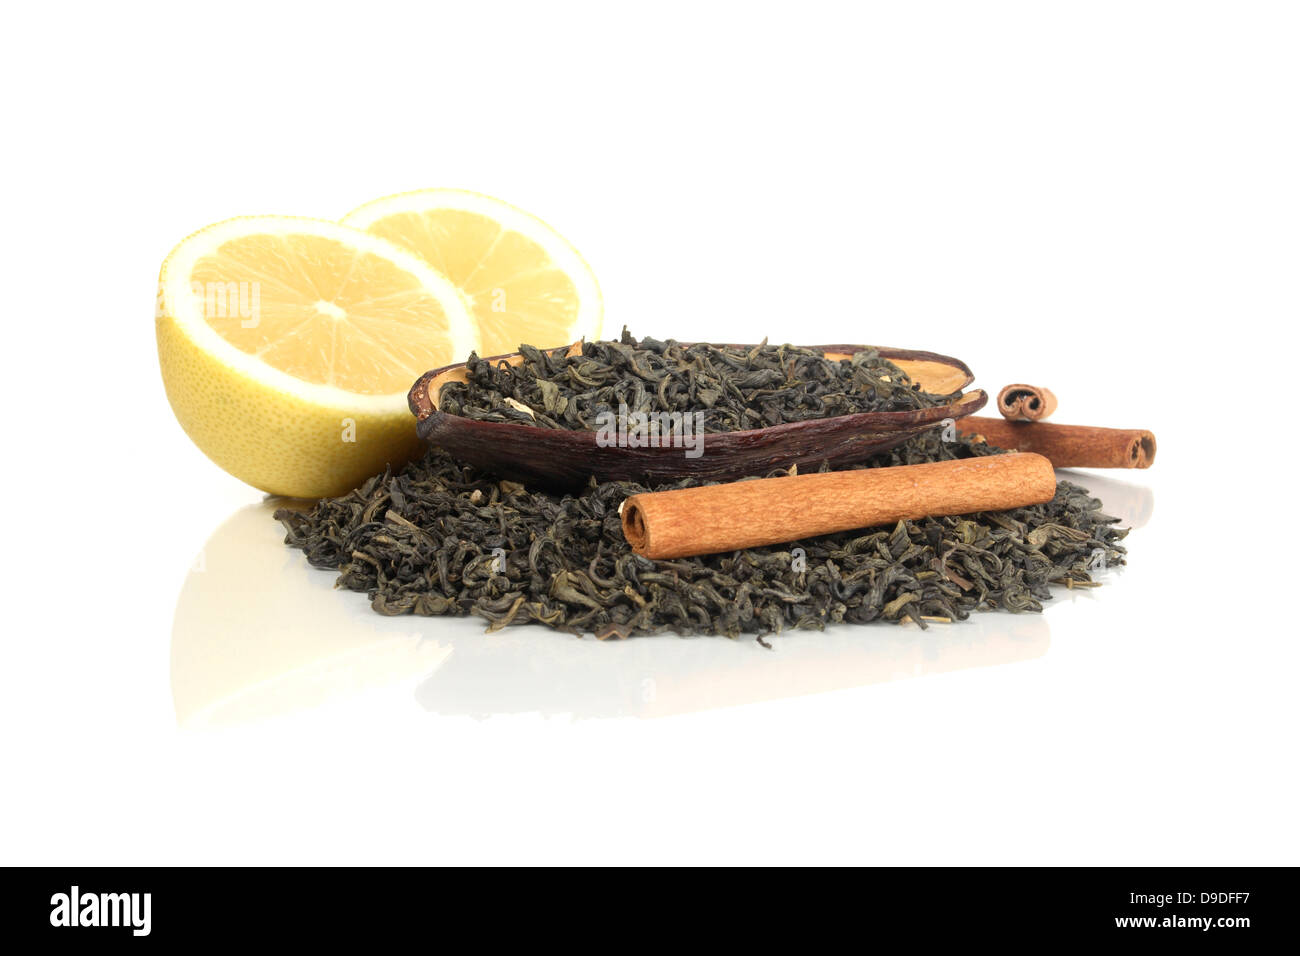 Tea mixture with lemon and cinnamon sticks Stock Photo